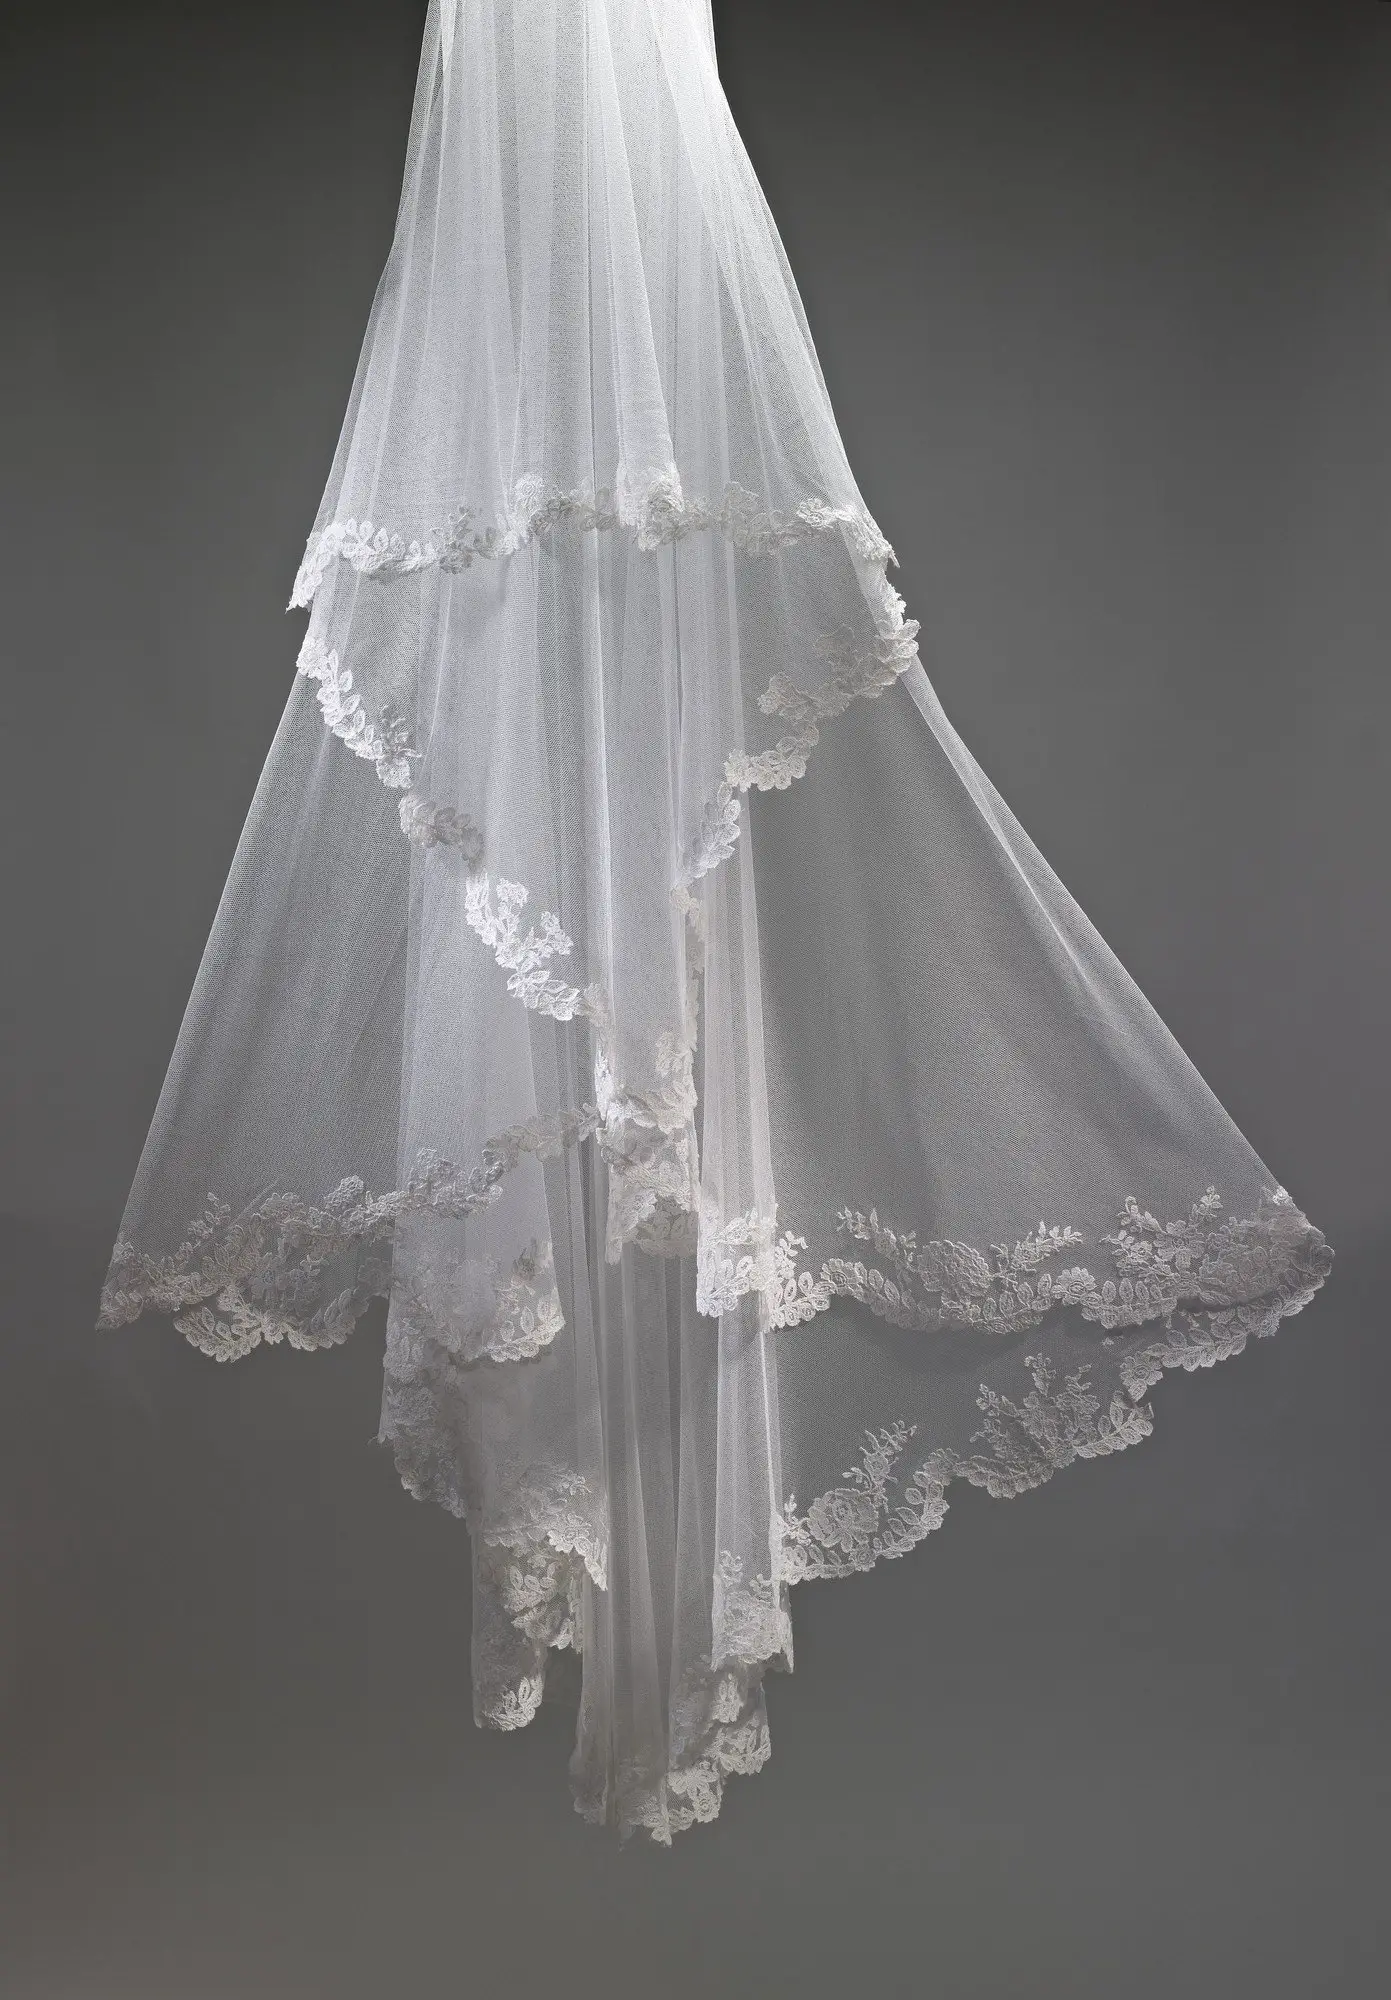 Duchess of Cambridge's wedding veil